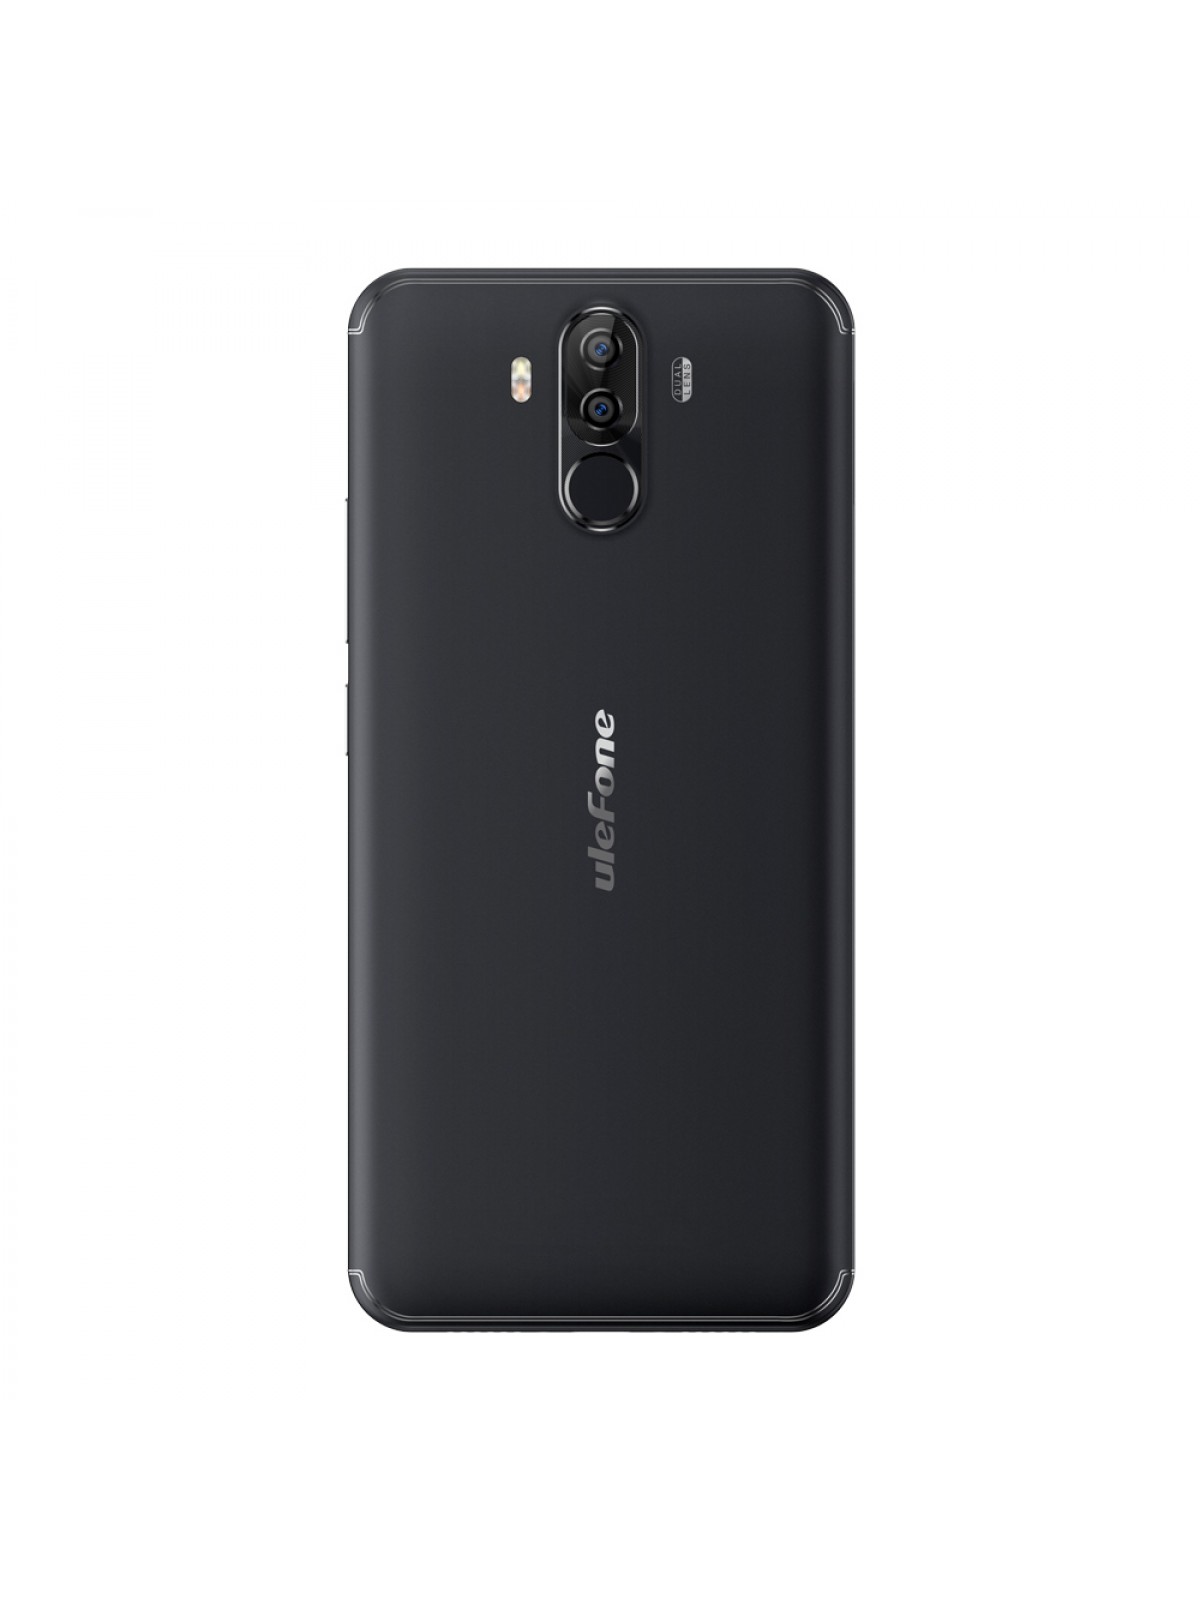 Ulefone Power 3 Android Phone (Black)